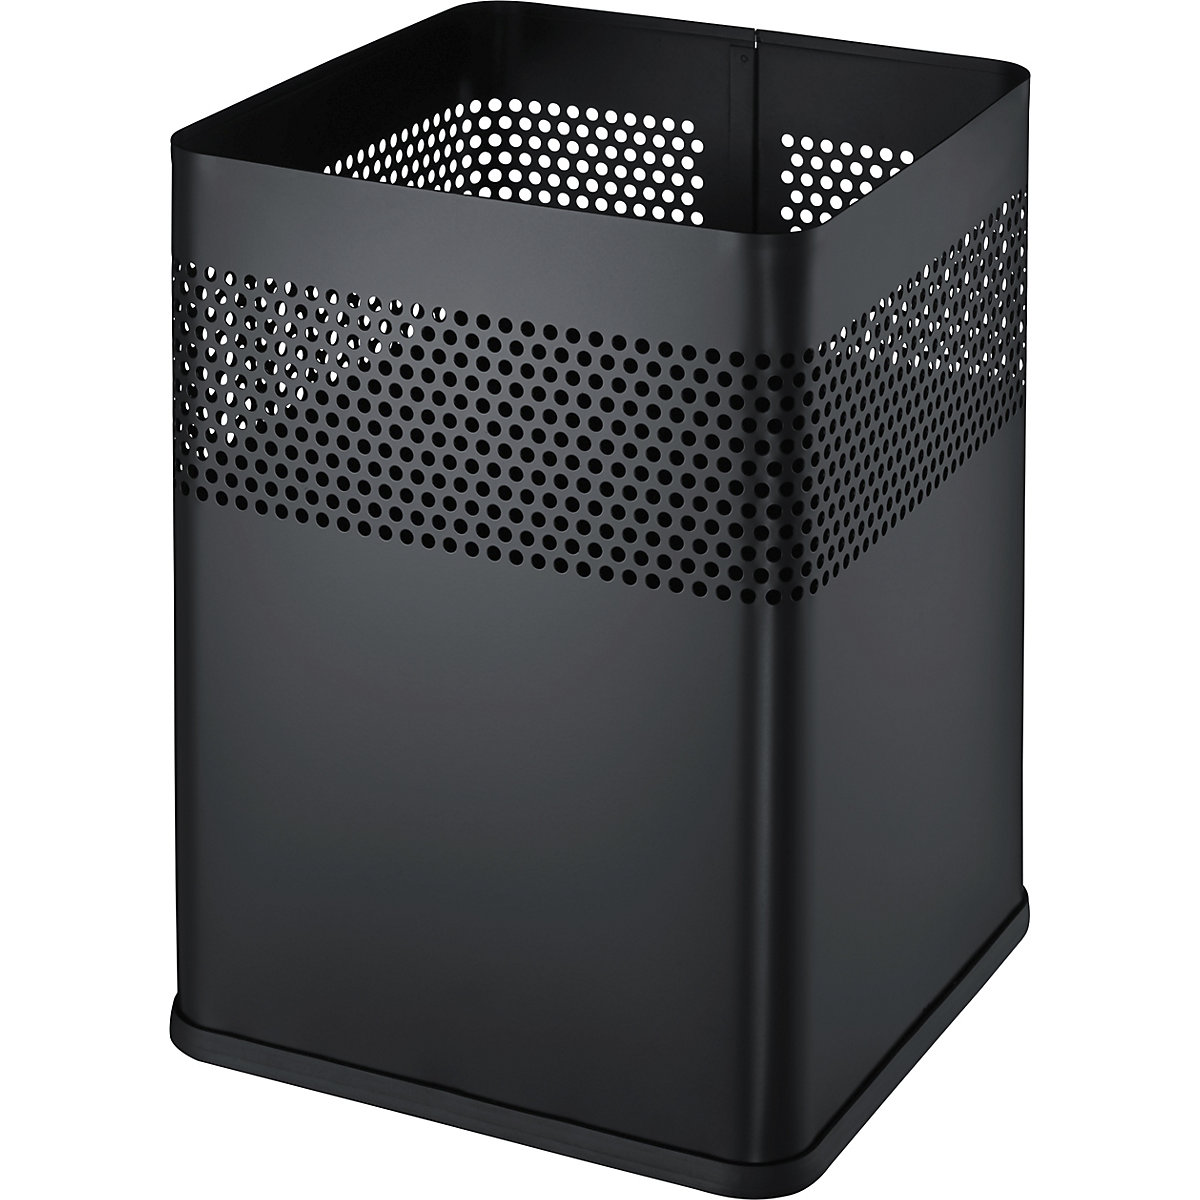 Waste paper bin, square – helit, capacity 18 l, WxHxD 240 x 325 x 240 mm, black, pack of 2-3